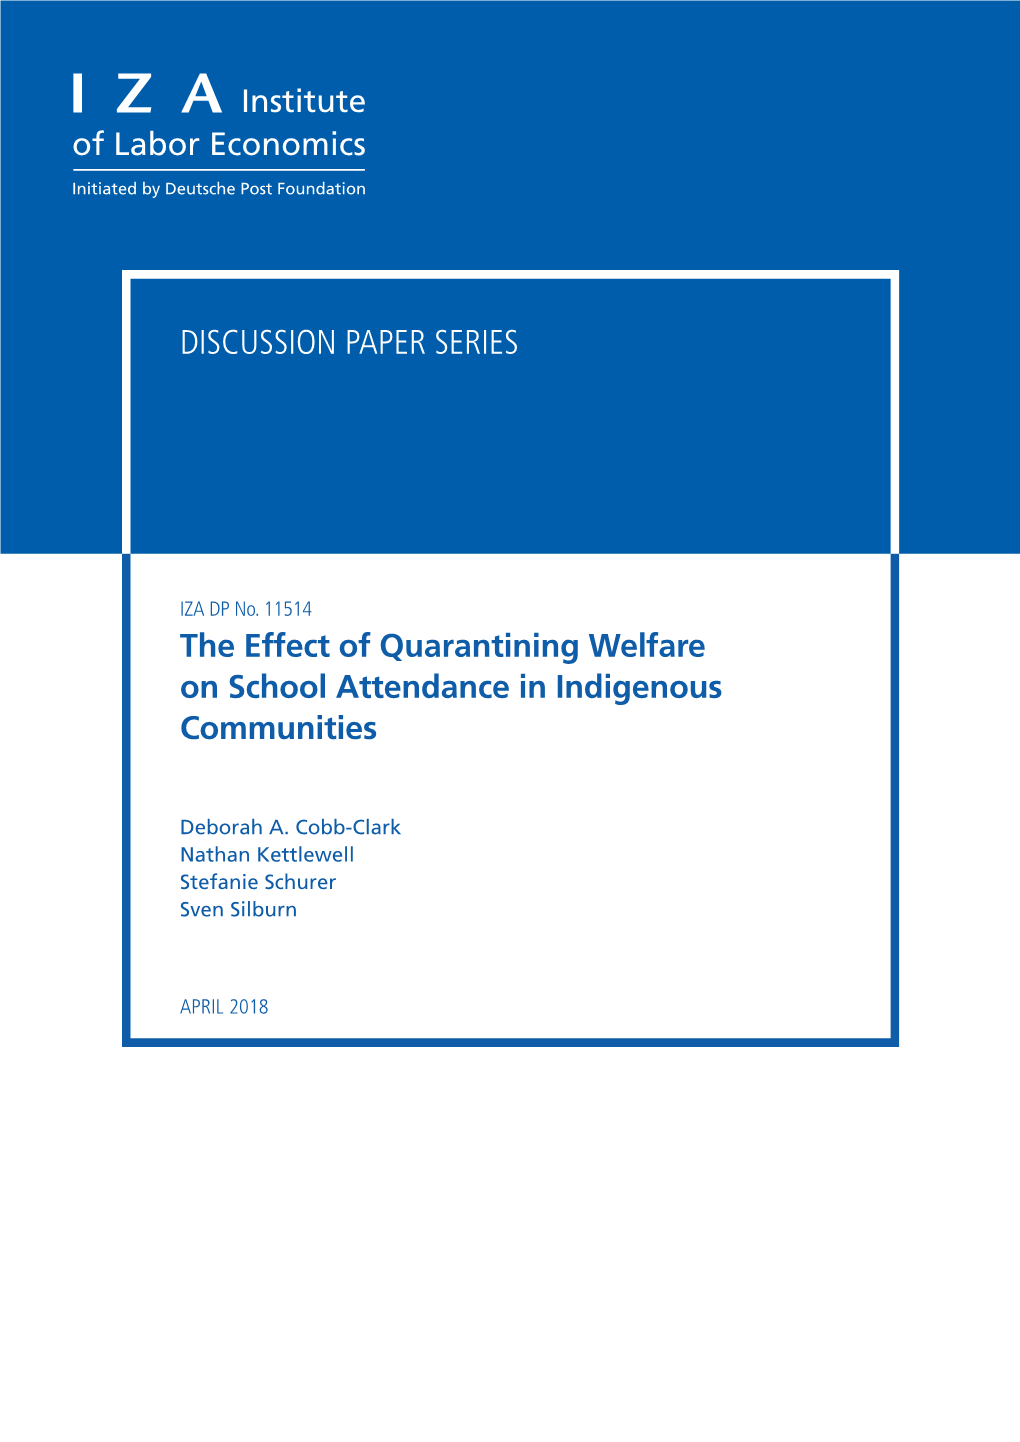 The Effect of Quarantining Welfare on School Attendance in Indigenous Communities